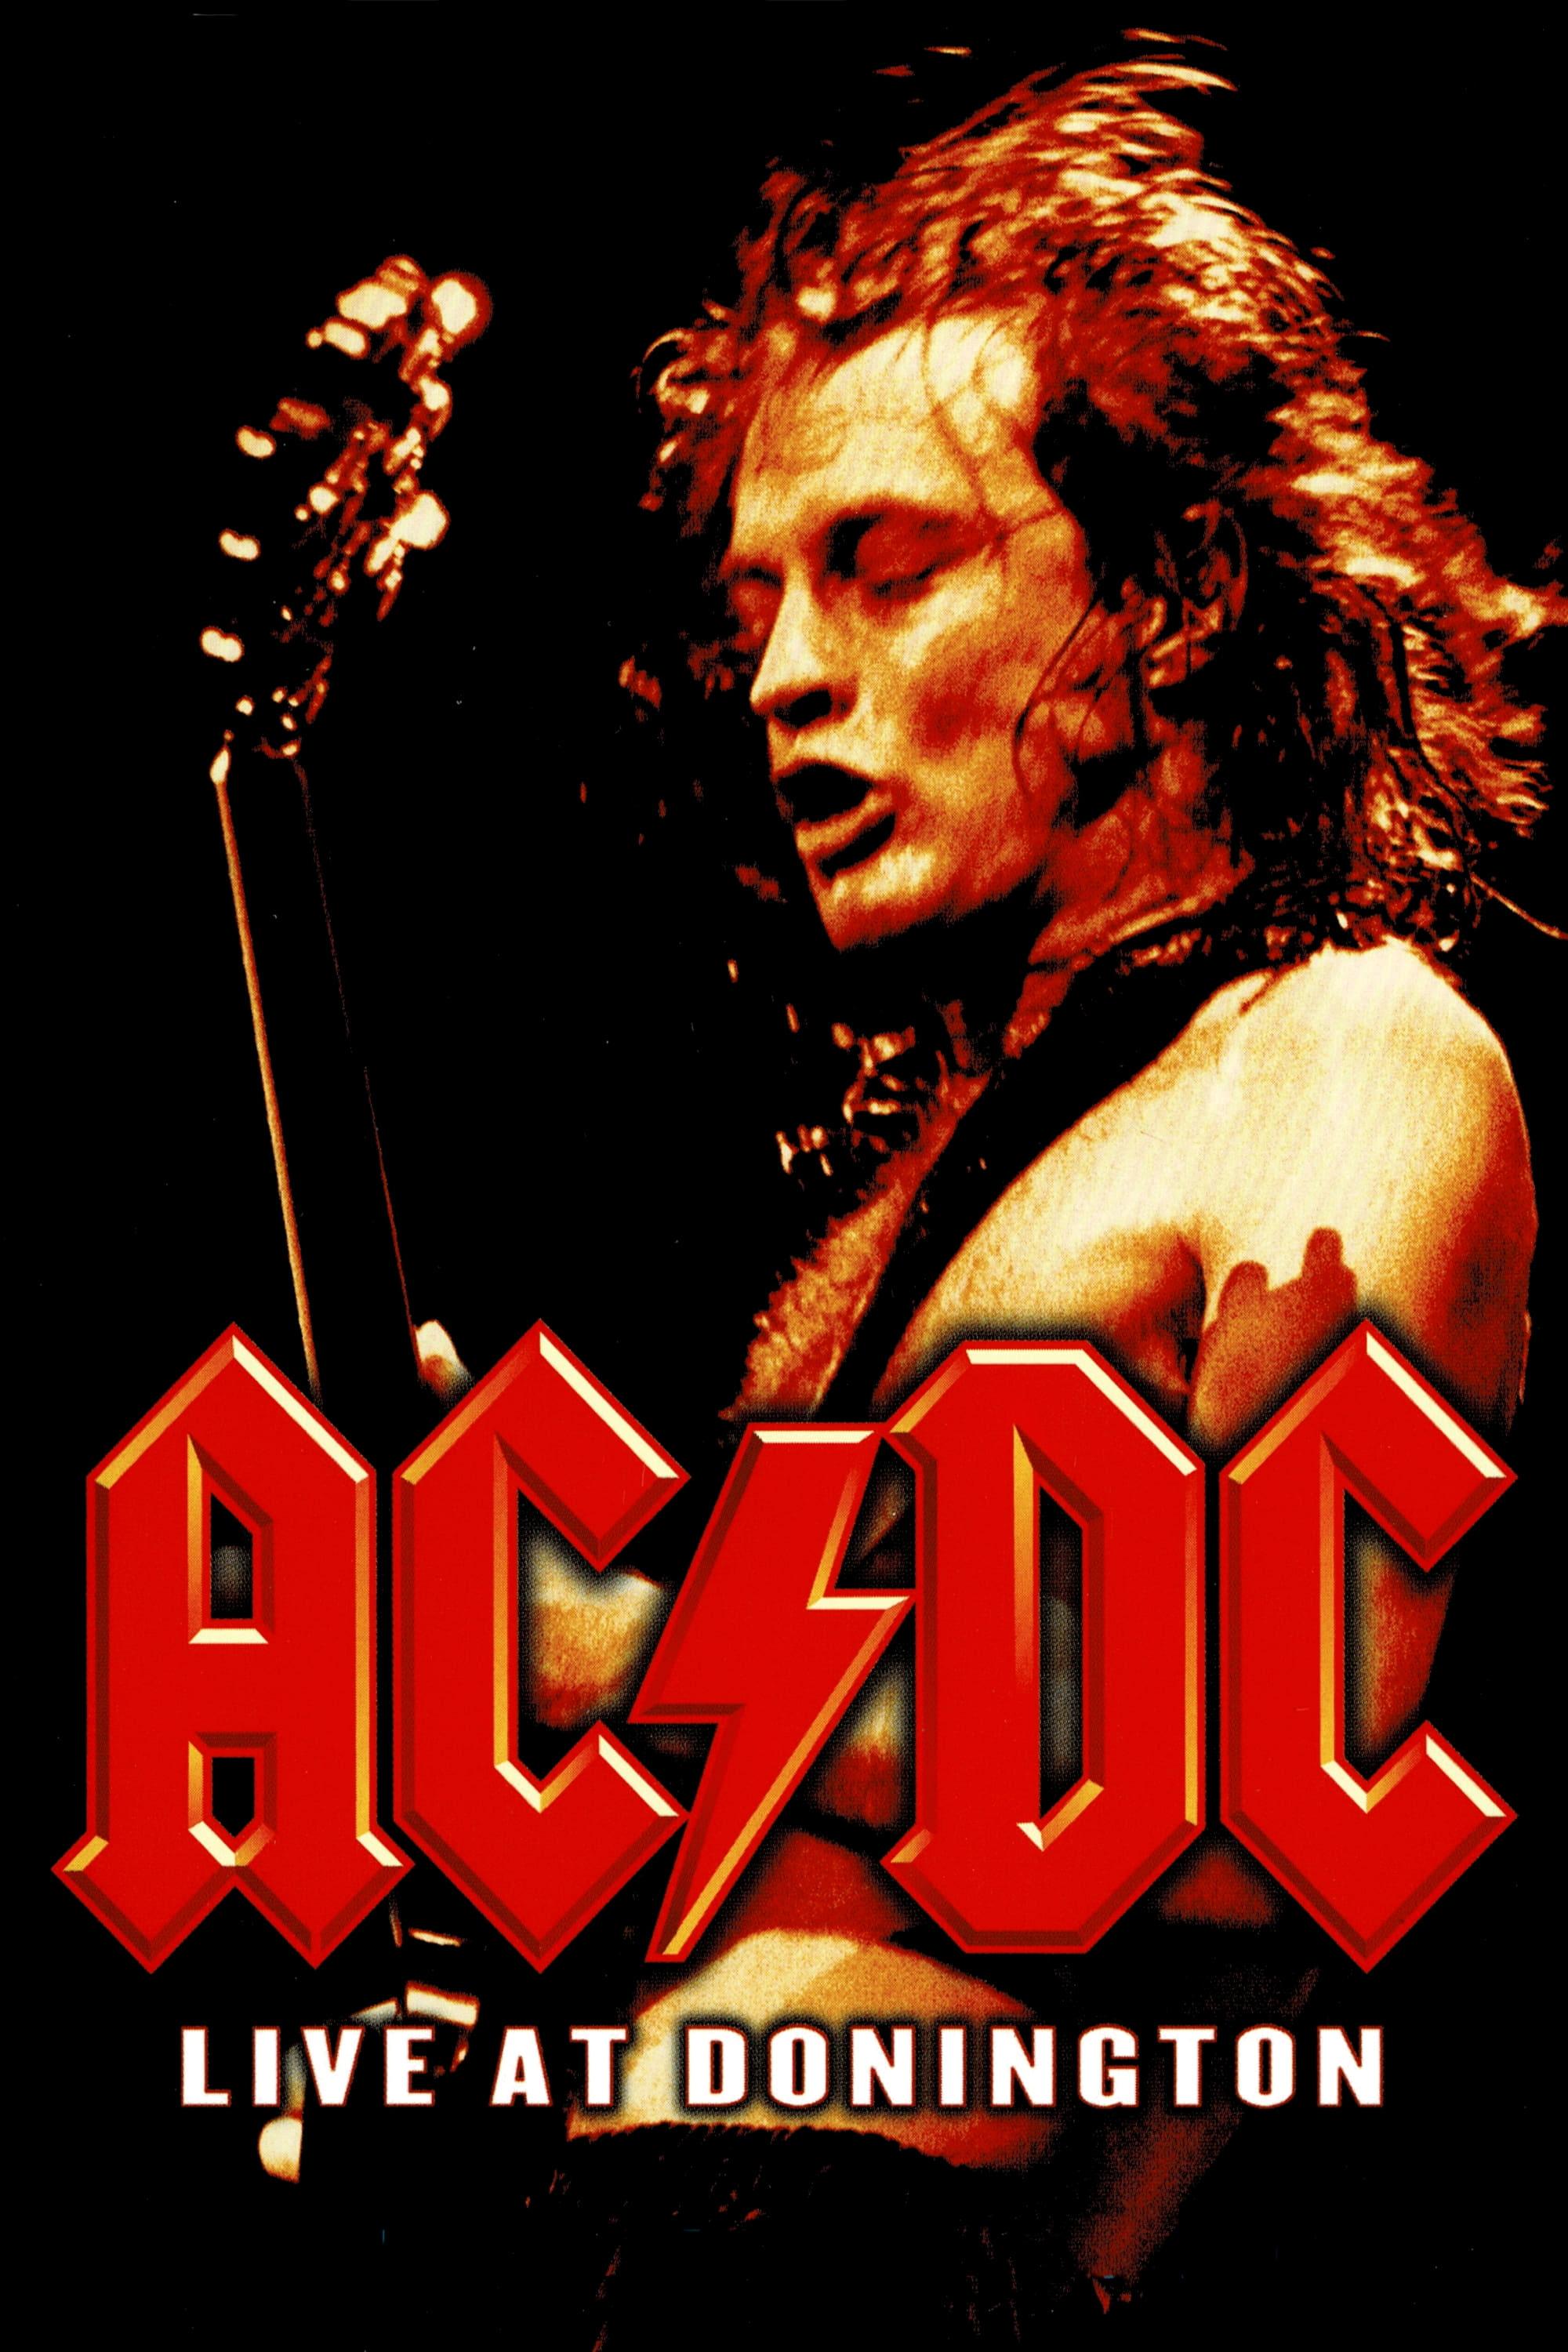 AC/DC: Live At Donington poster